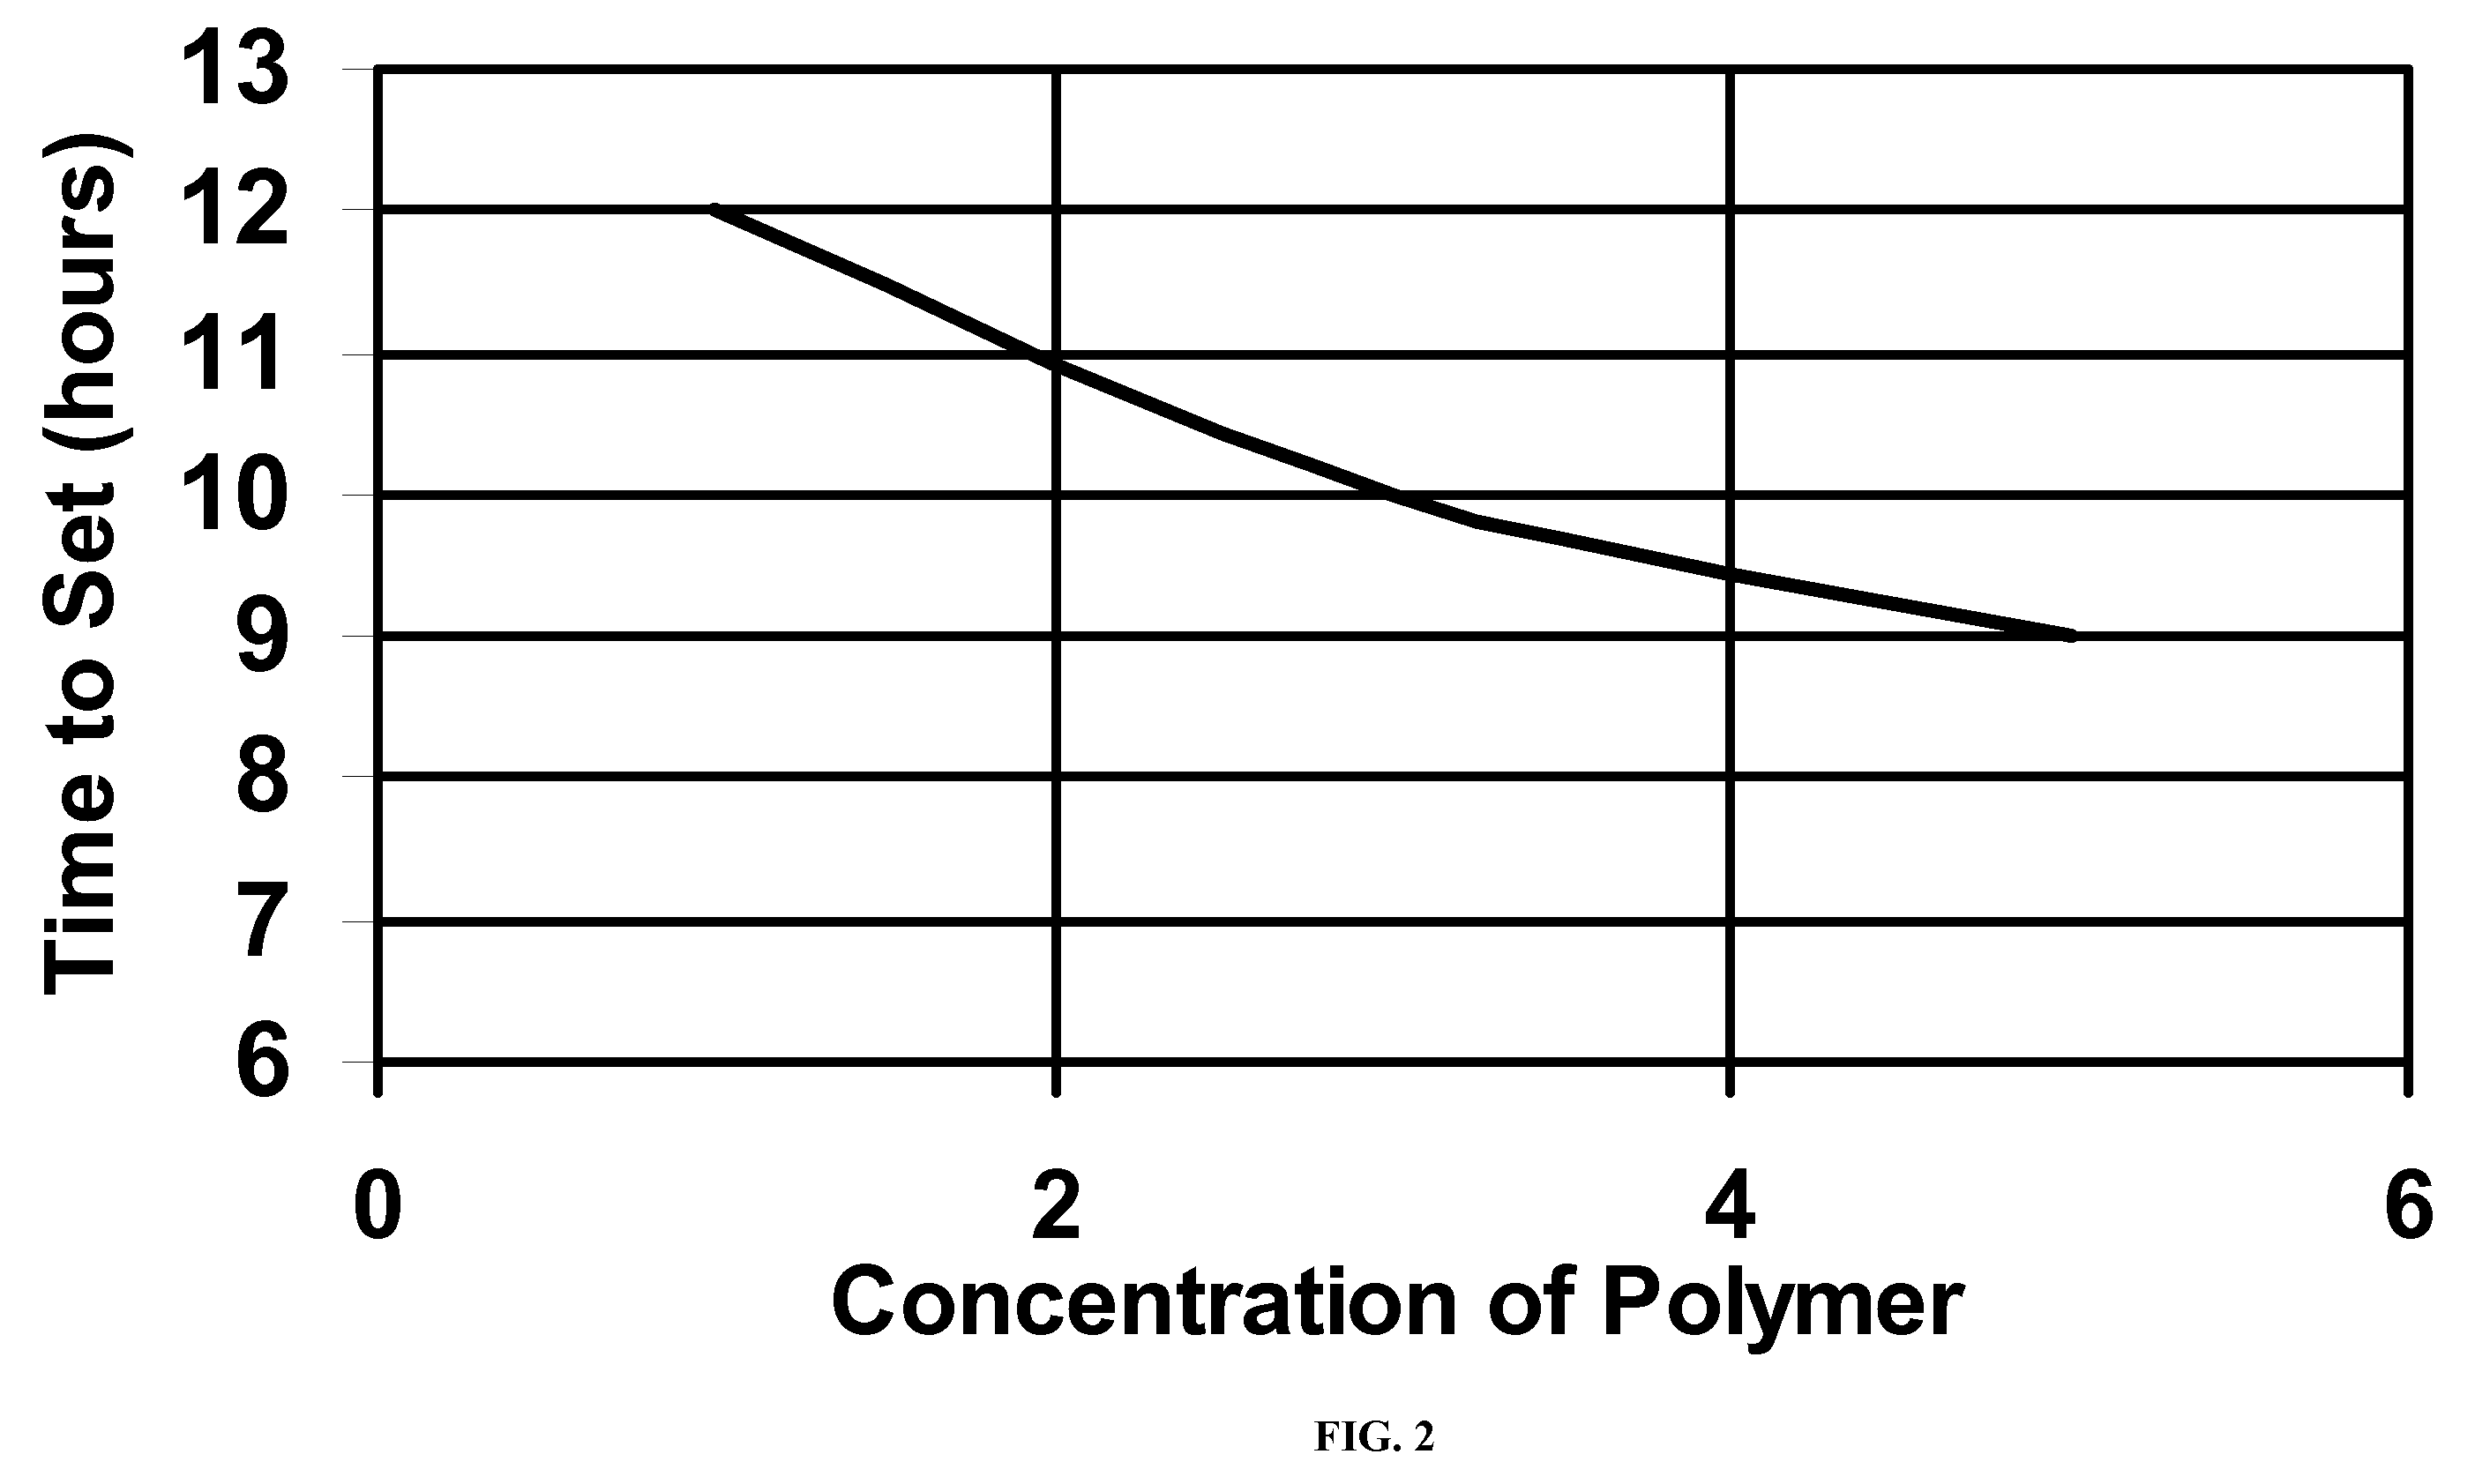 Delayed polyacrylamide-co-aluminum hydroxyl chloride gel